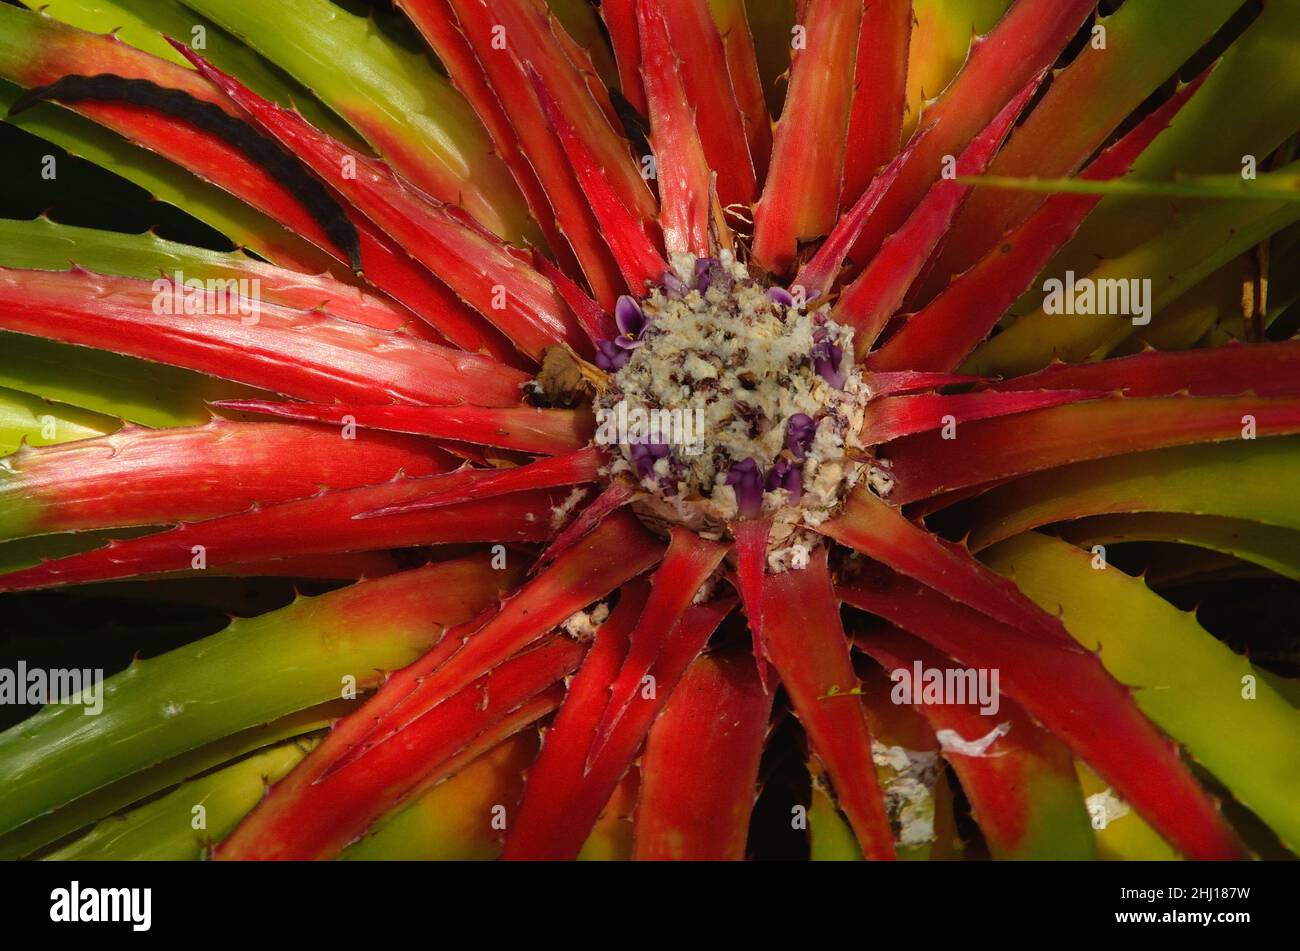 Antillen-Bodenbromelie, terrestrial bromeliad, Bromelia humilis, Curacao Stock Photo